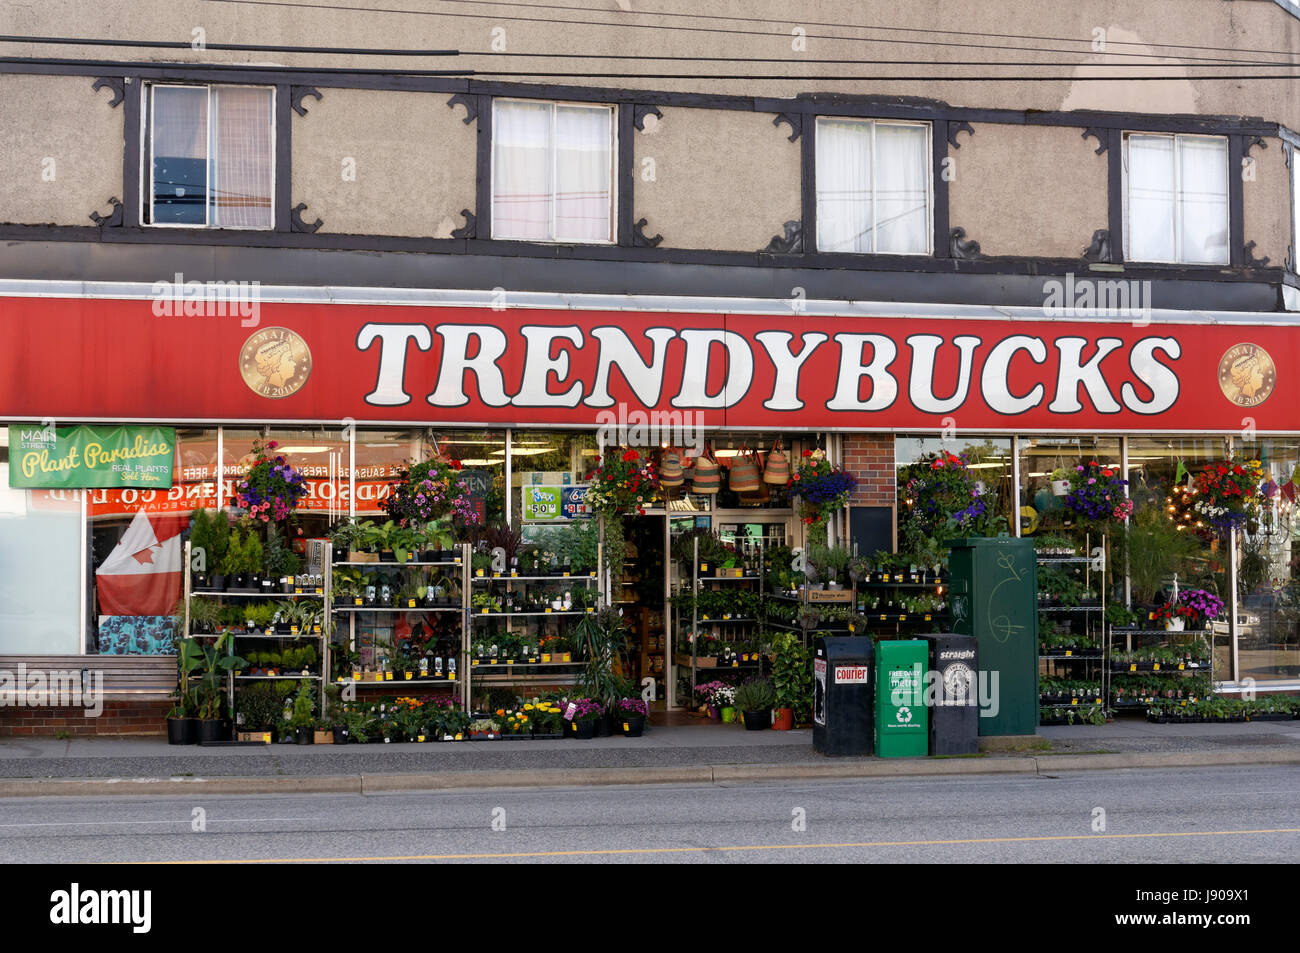 Trendybucks low cost variety store on Main Street, Vancouver, British Columbia, Canada Stock Photo